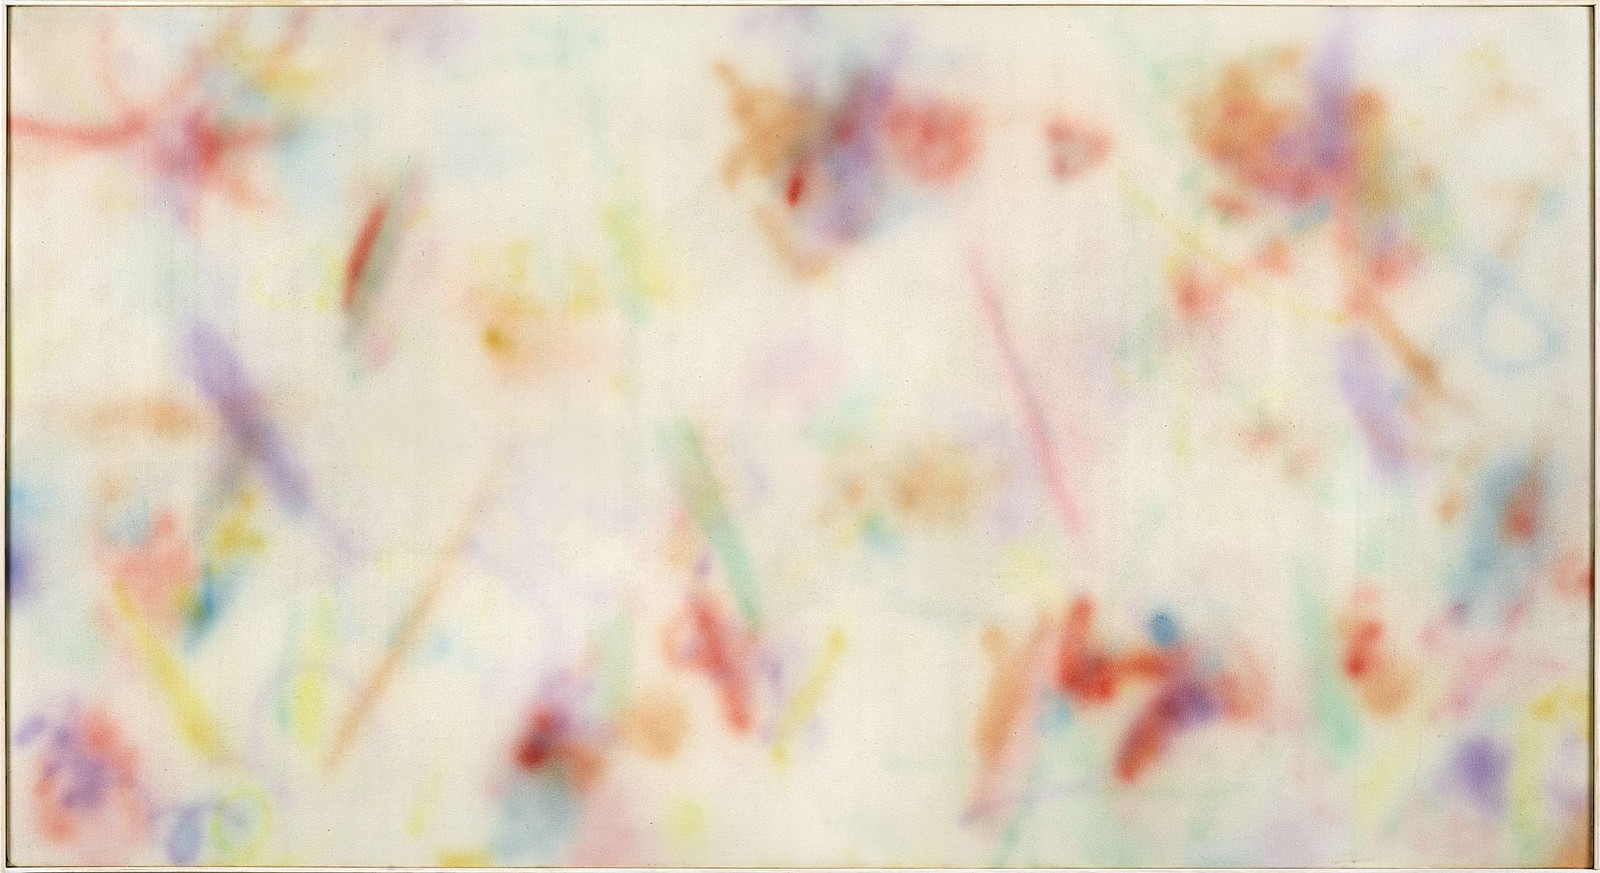 Dan Christensen, Thrush | SOLD, 1967
Acrylic on canvas, 44 x 82 in. (111.8 x 208.3 cm)
CHR-00283